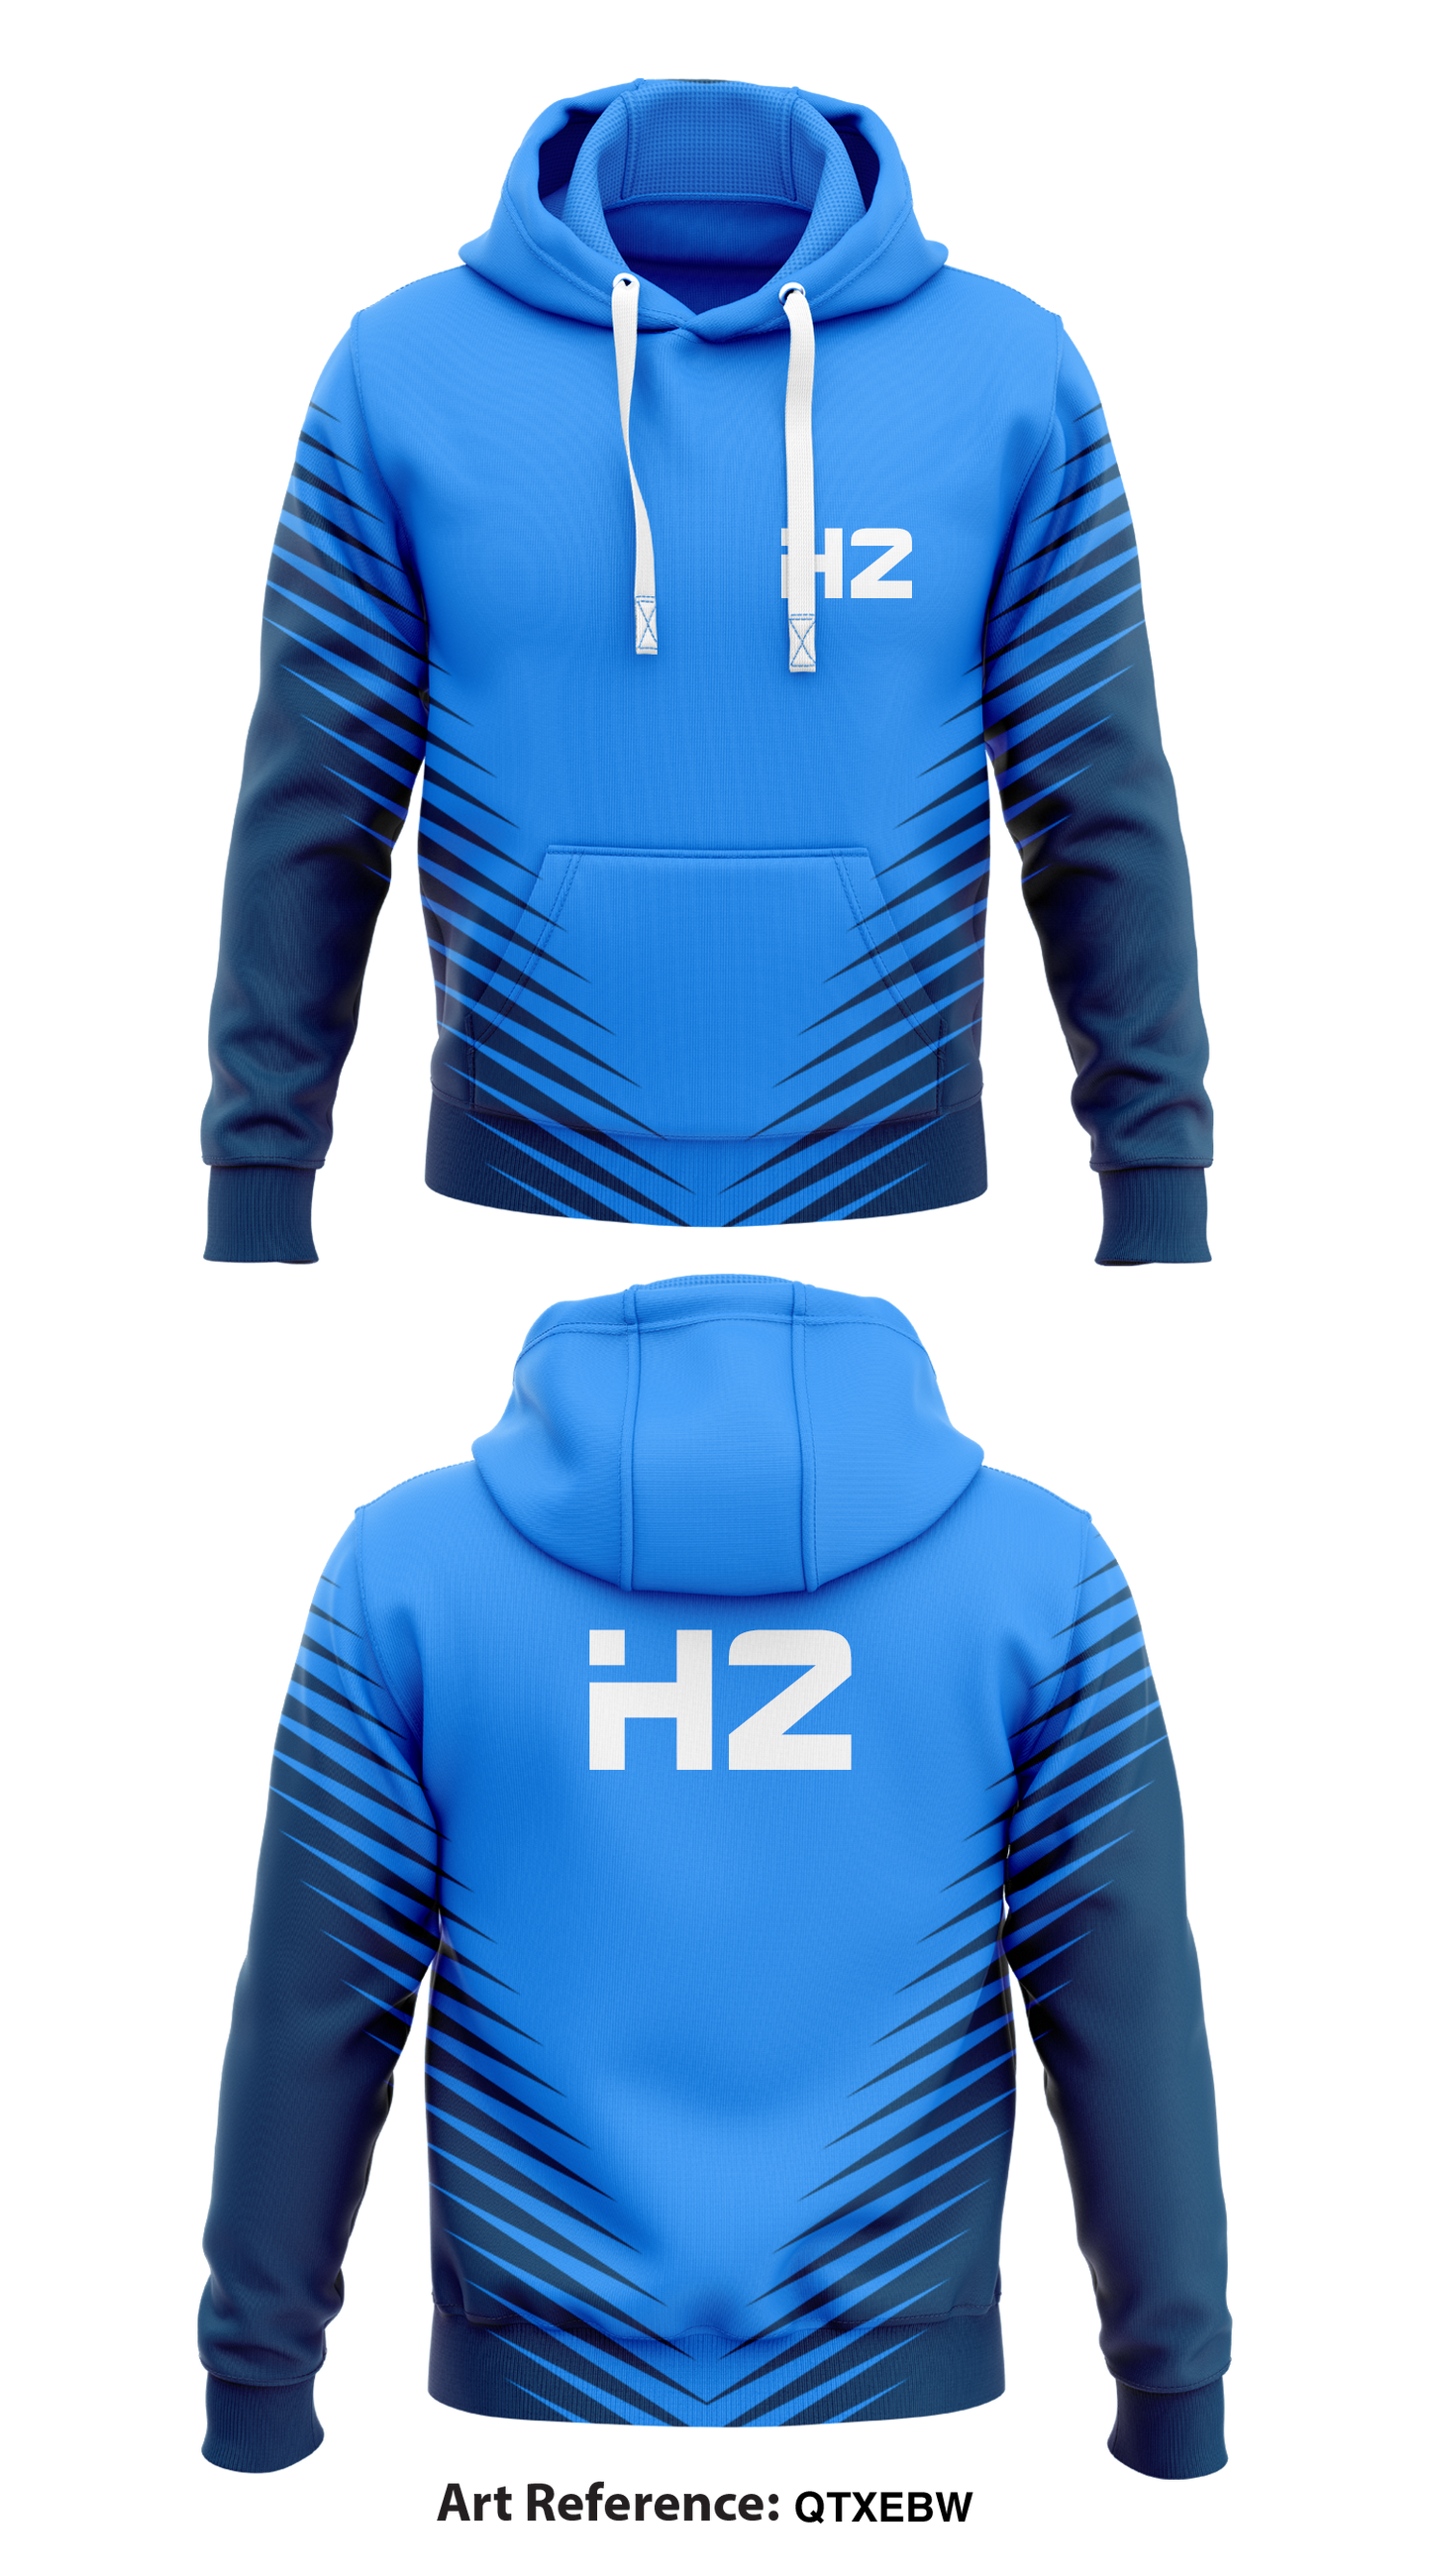 H2 Store 1 Core Men's Hooded Performance Sweatshirt - QtxEbW